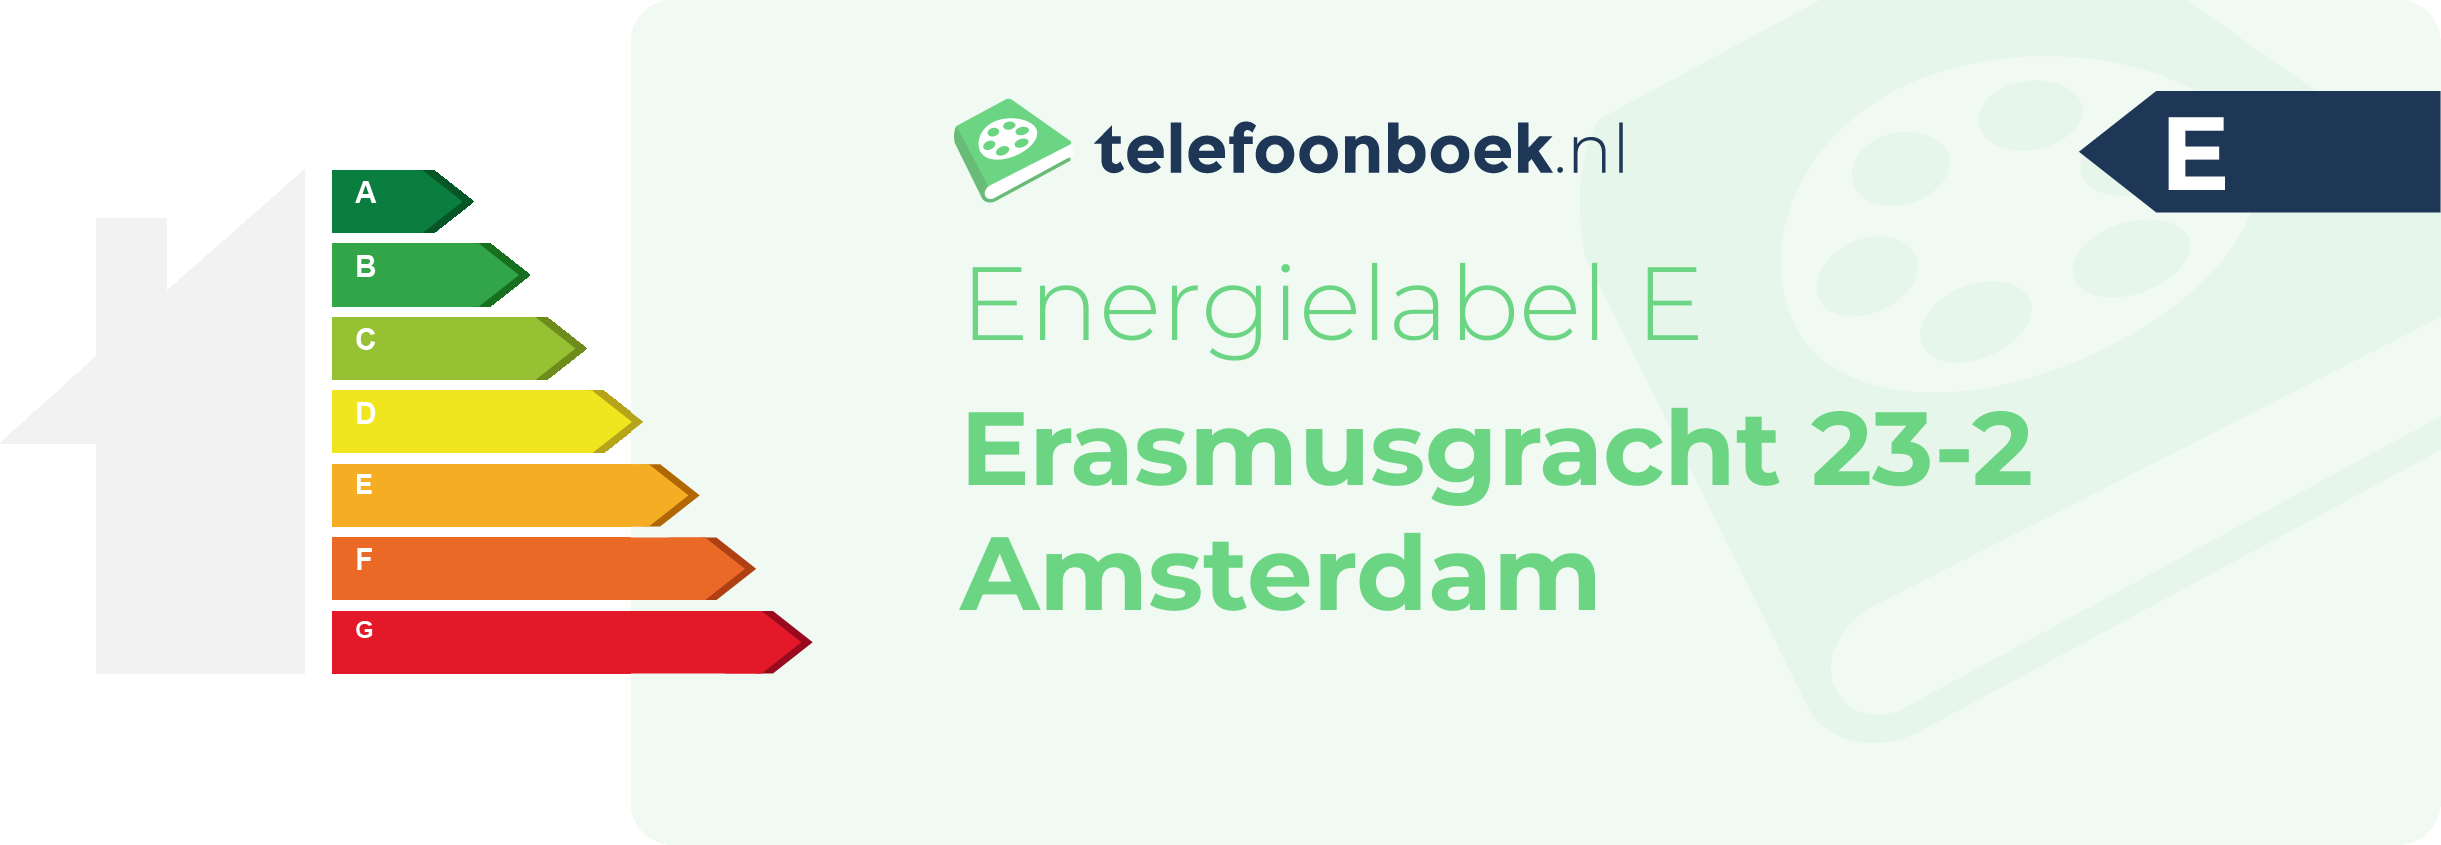 Energielabel Erasmusgracht 23-2 Amsterdam